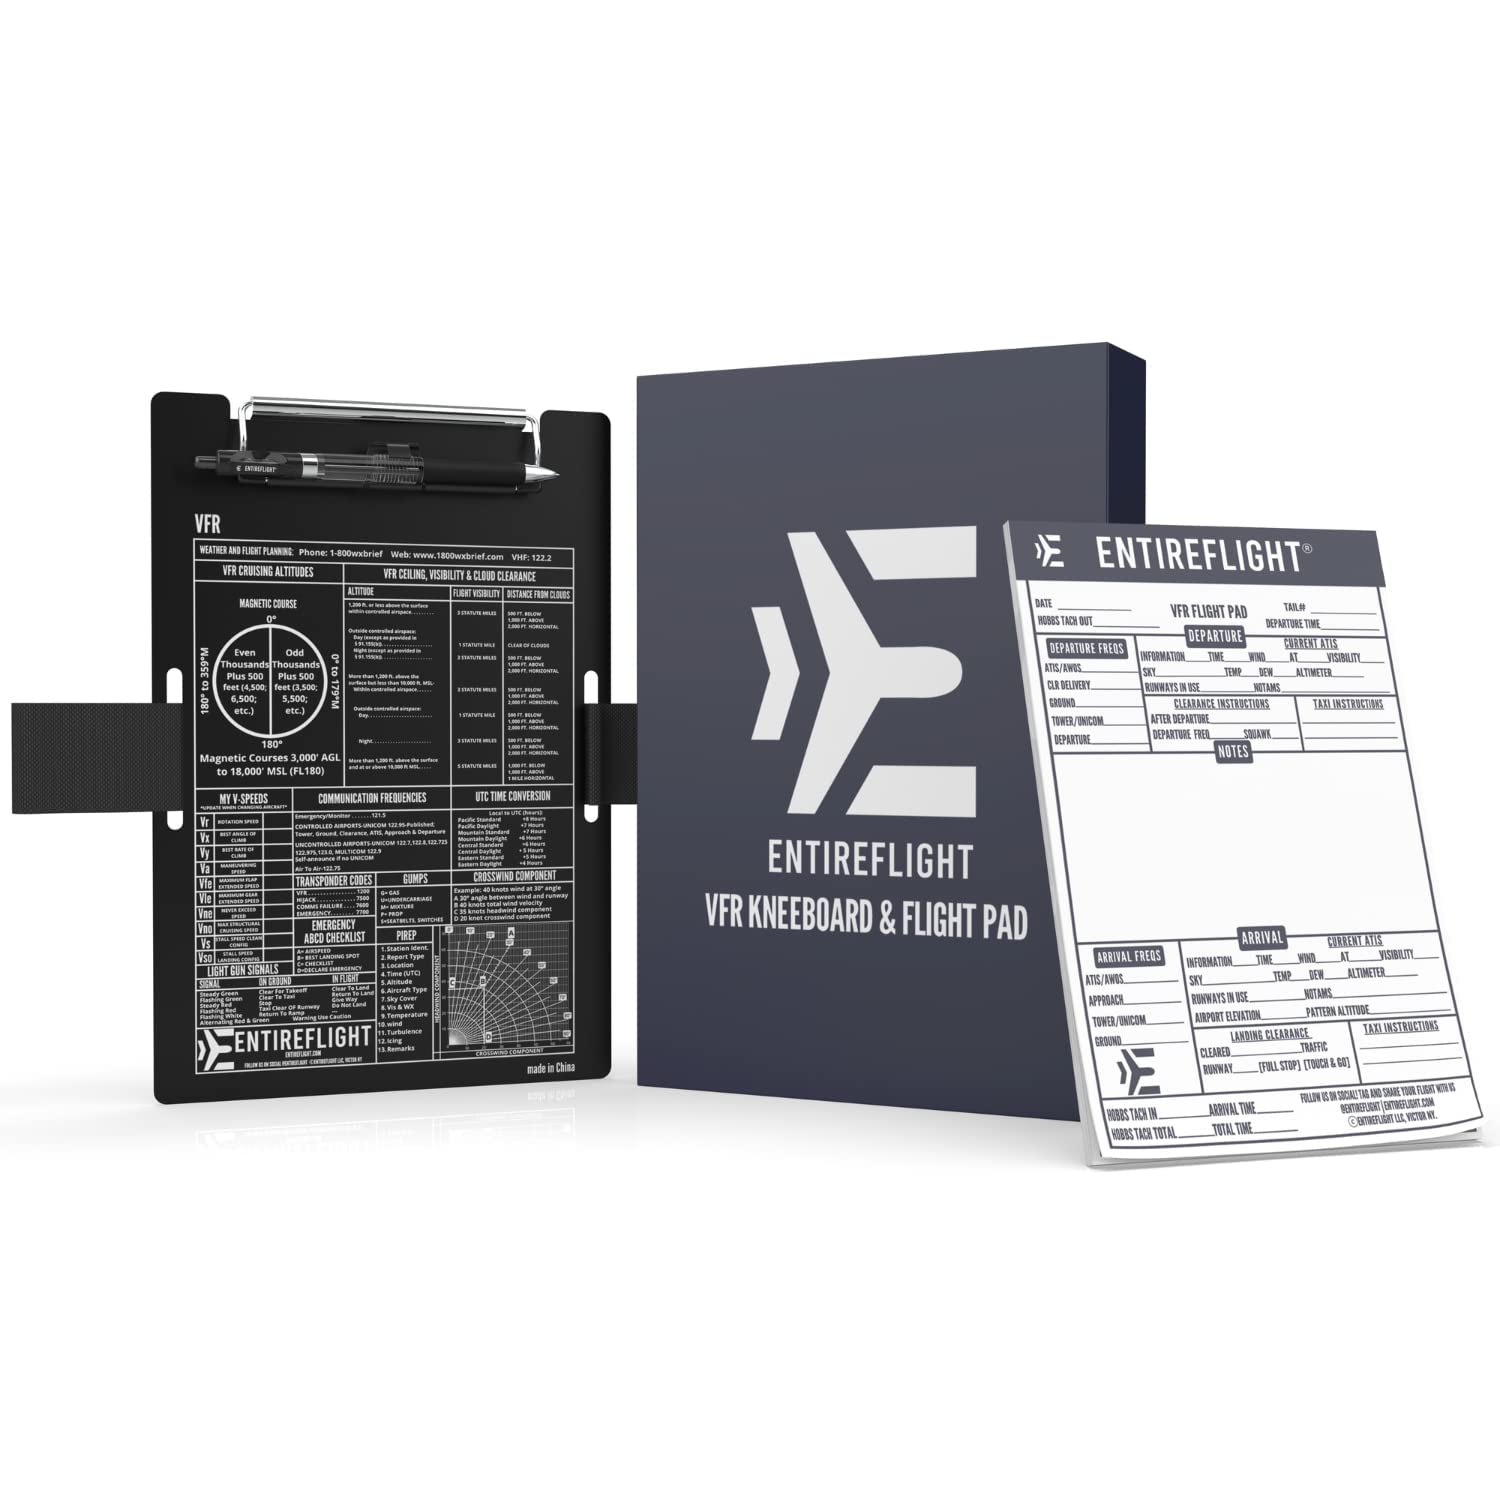 EntireFlight - VFR NotePads, Pilot Kneeboard Box Set for Pilots Bundle - Aviation Gear, Premium Aviation Flight Pad, Pilot Kneeboard Accessories for Pilots